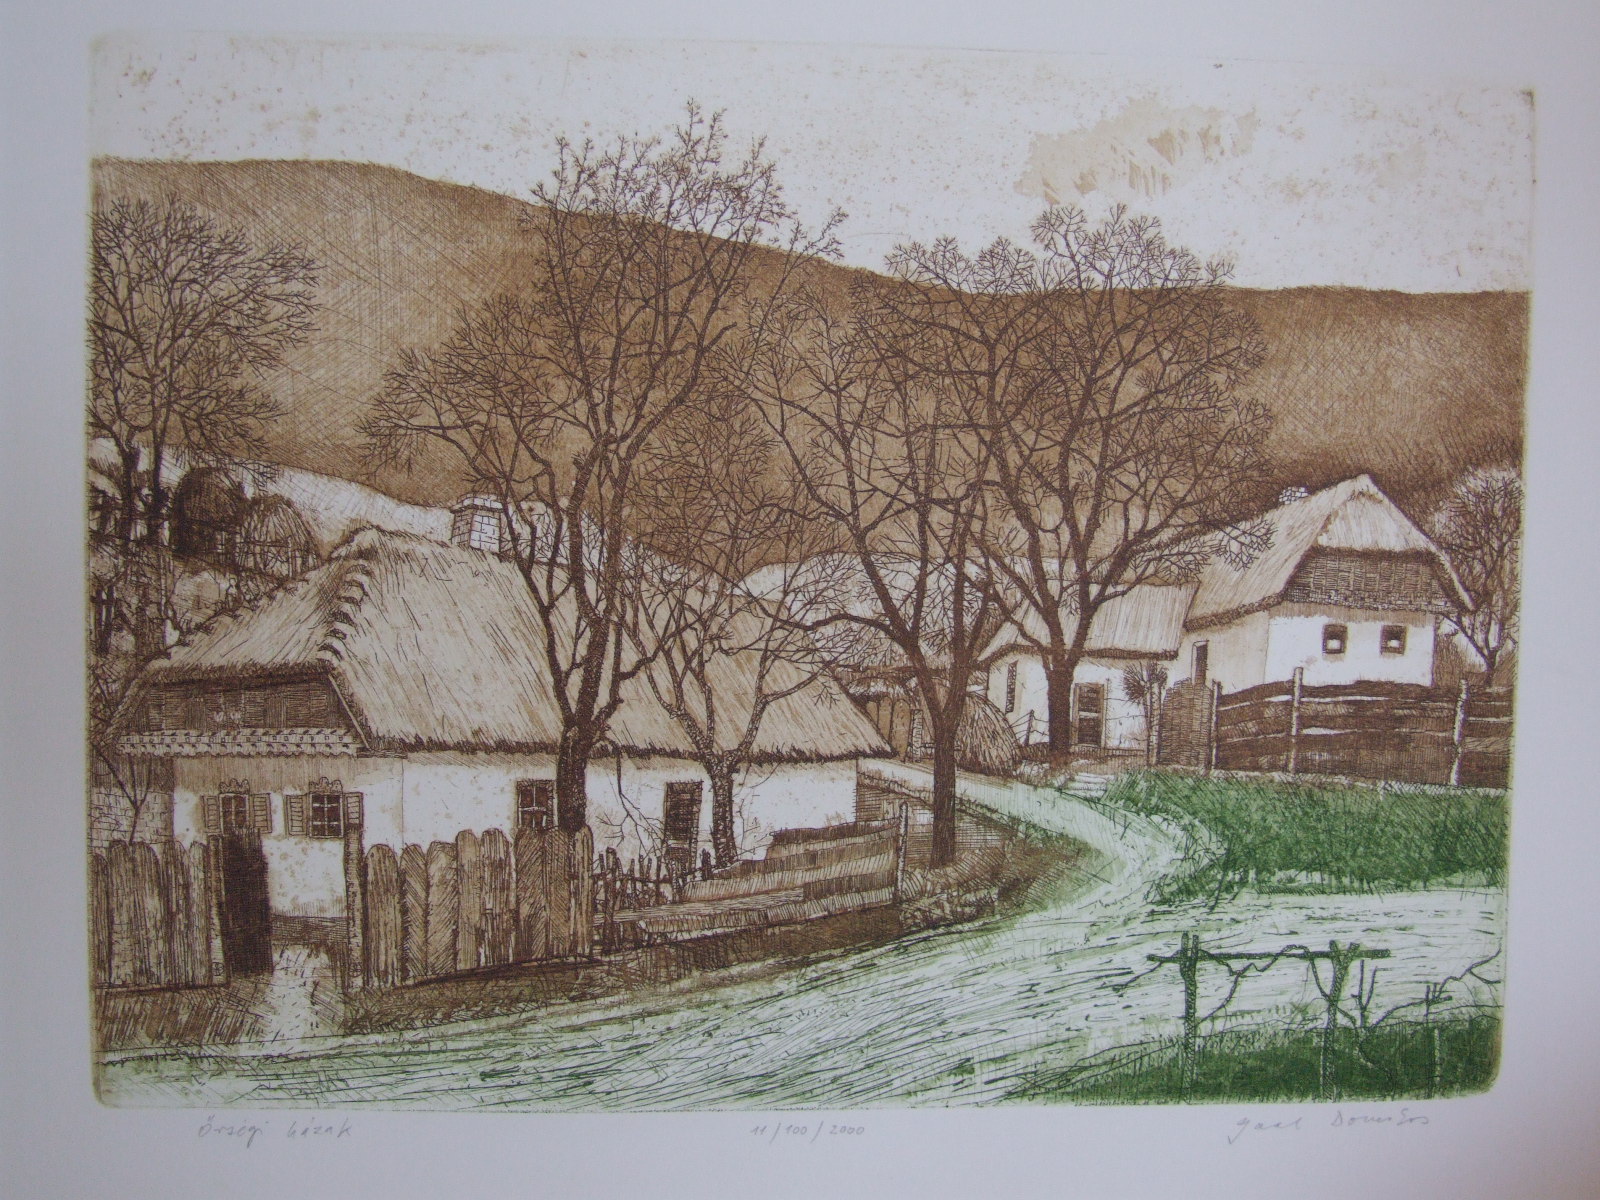 Gaál, Domokos: Houses in the Örség